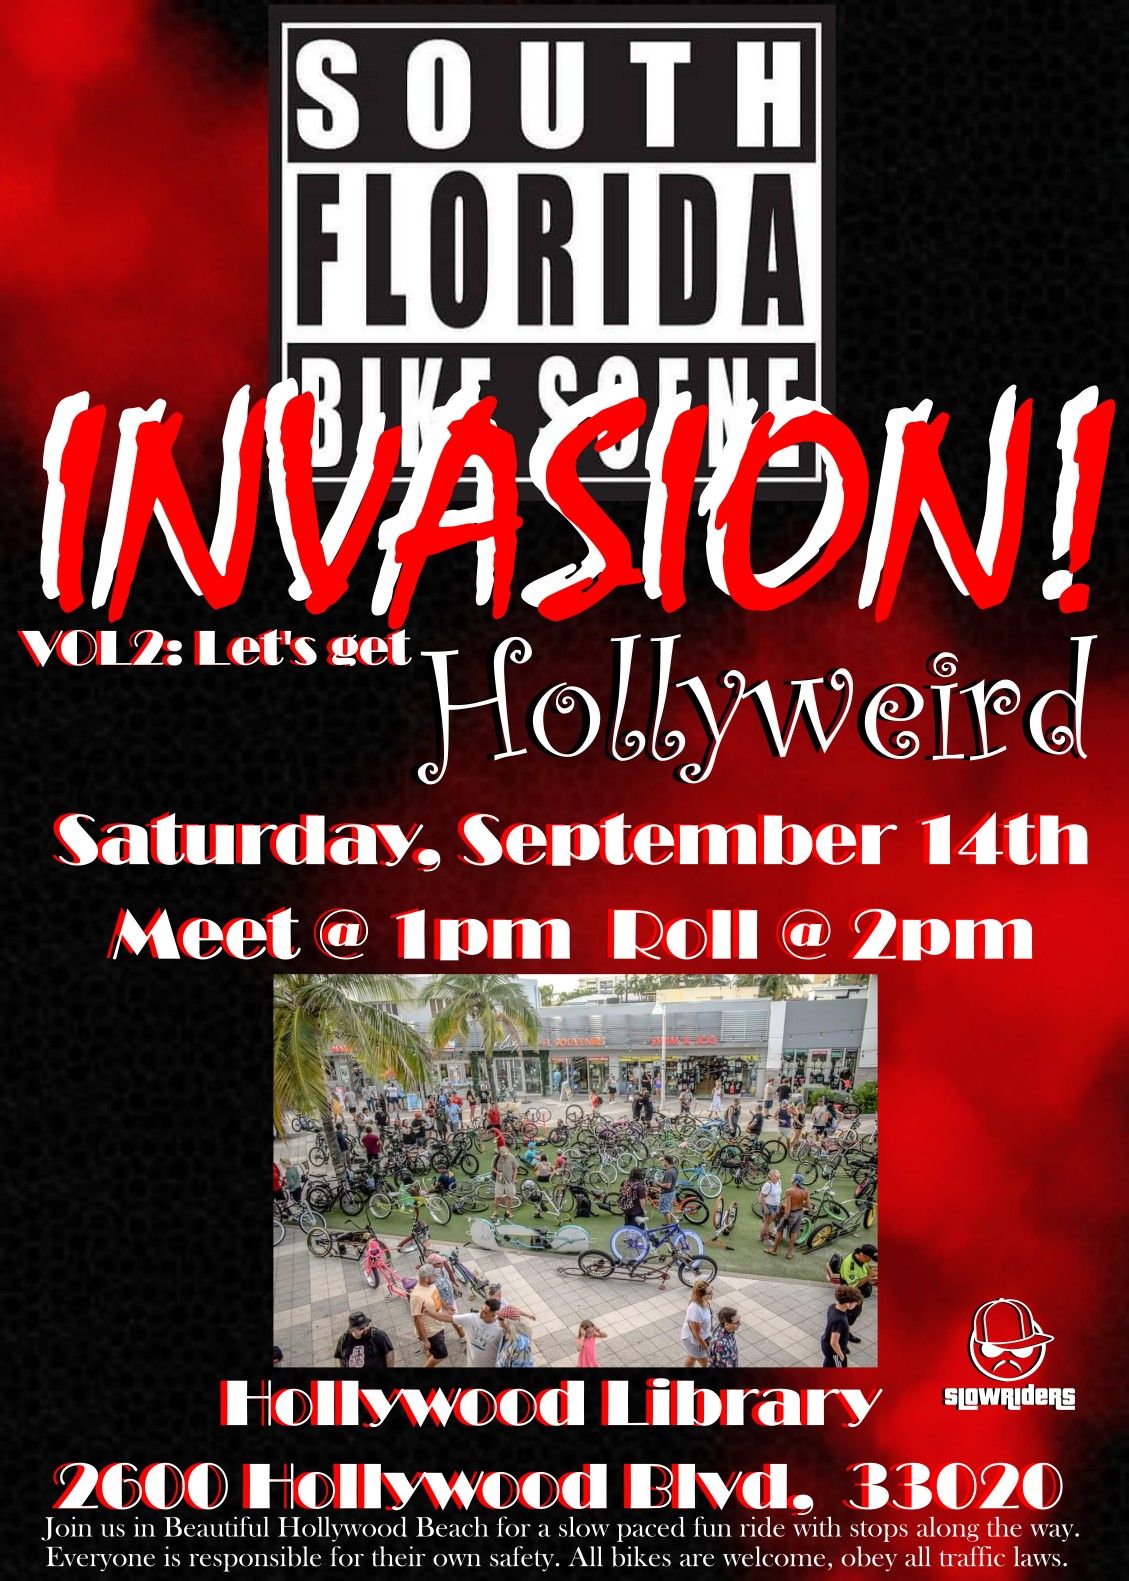 South Florida Bike Scene Invasion! Vol2: Hollyweird